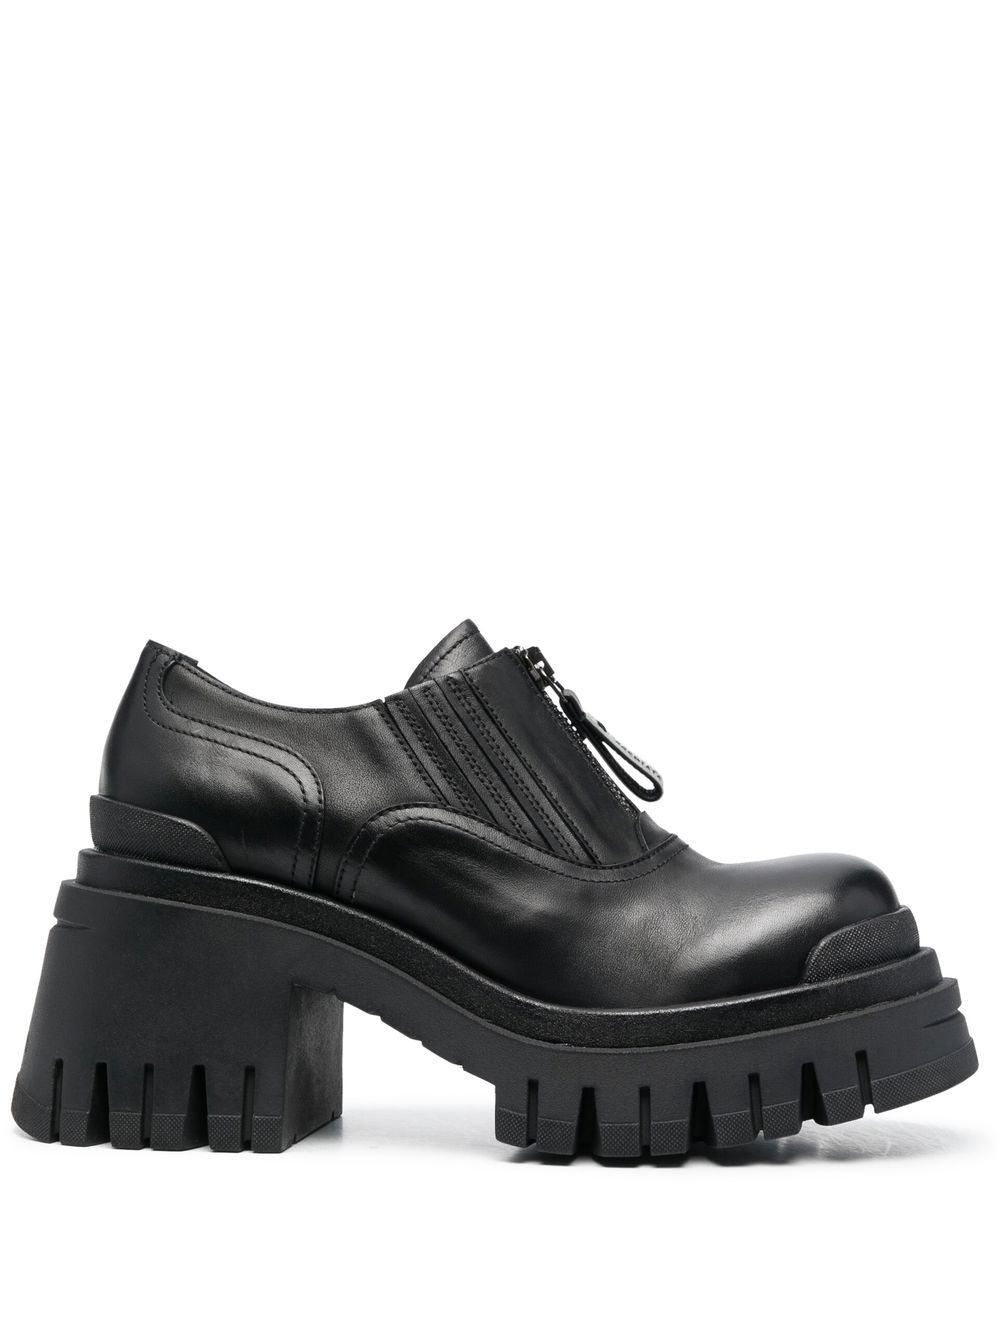 Premiata 80mm chunky sole boots - Black